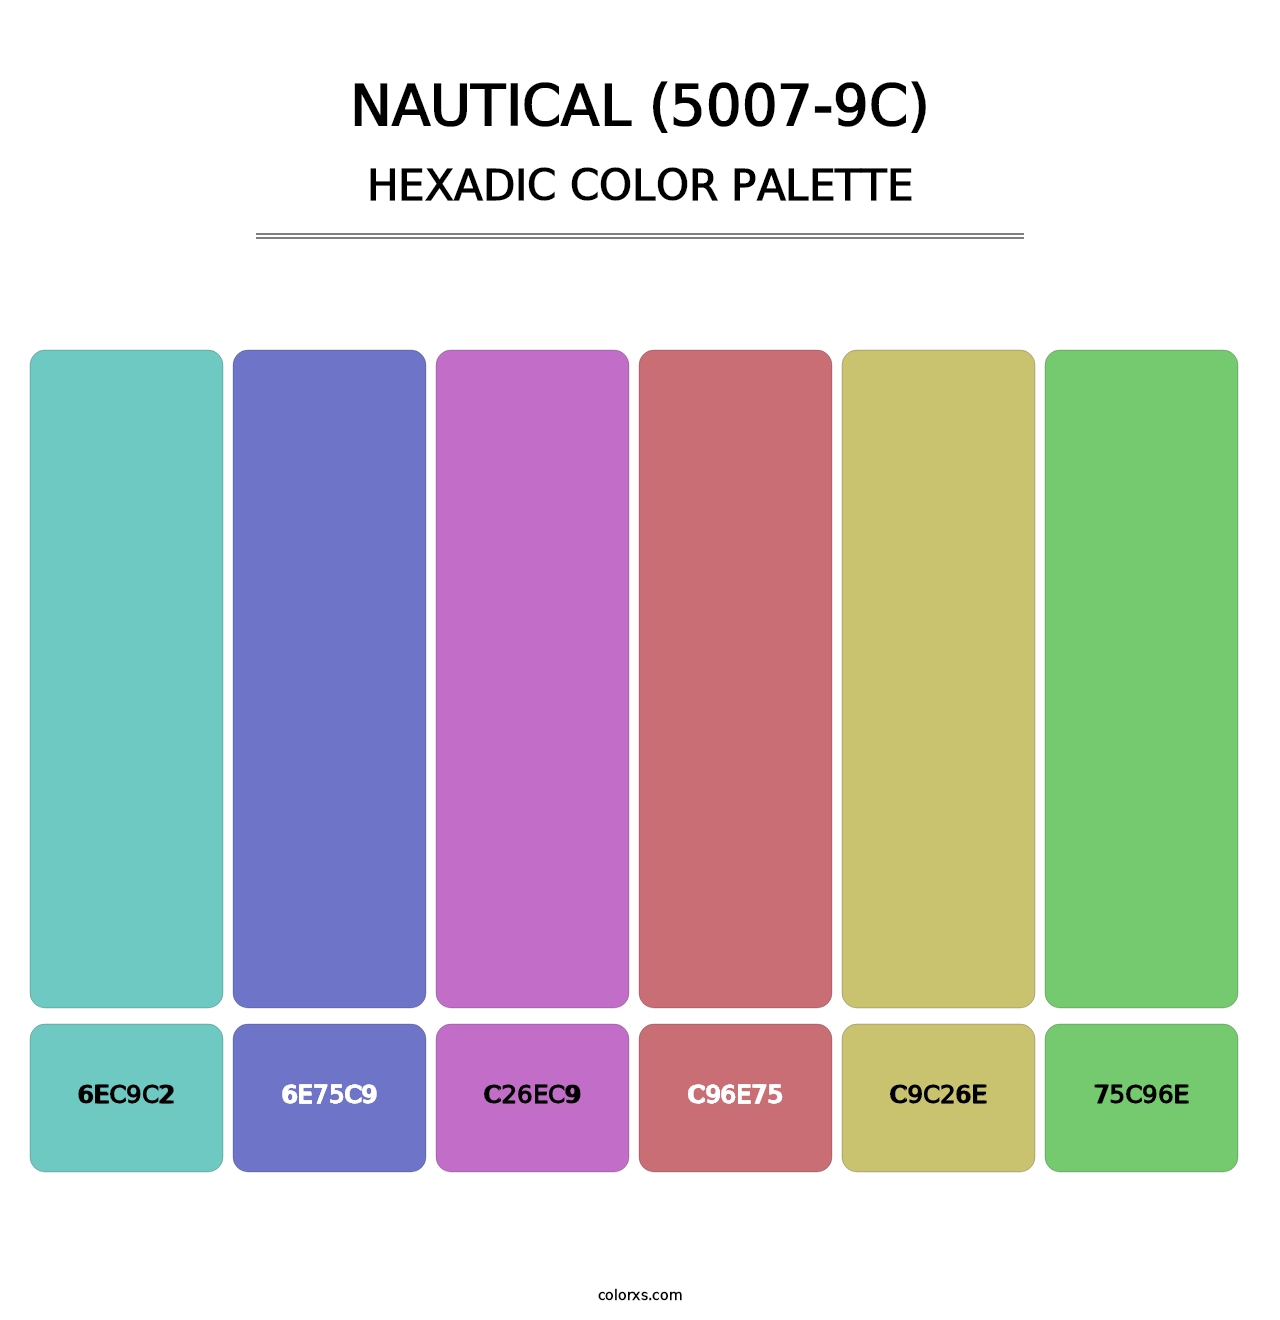 Nautical (5007-9C) - Hexadic Color Palette